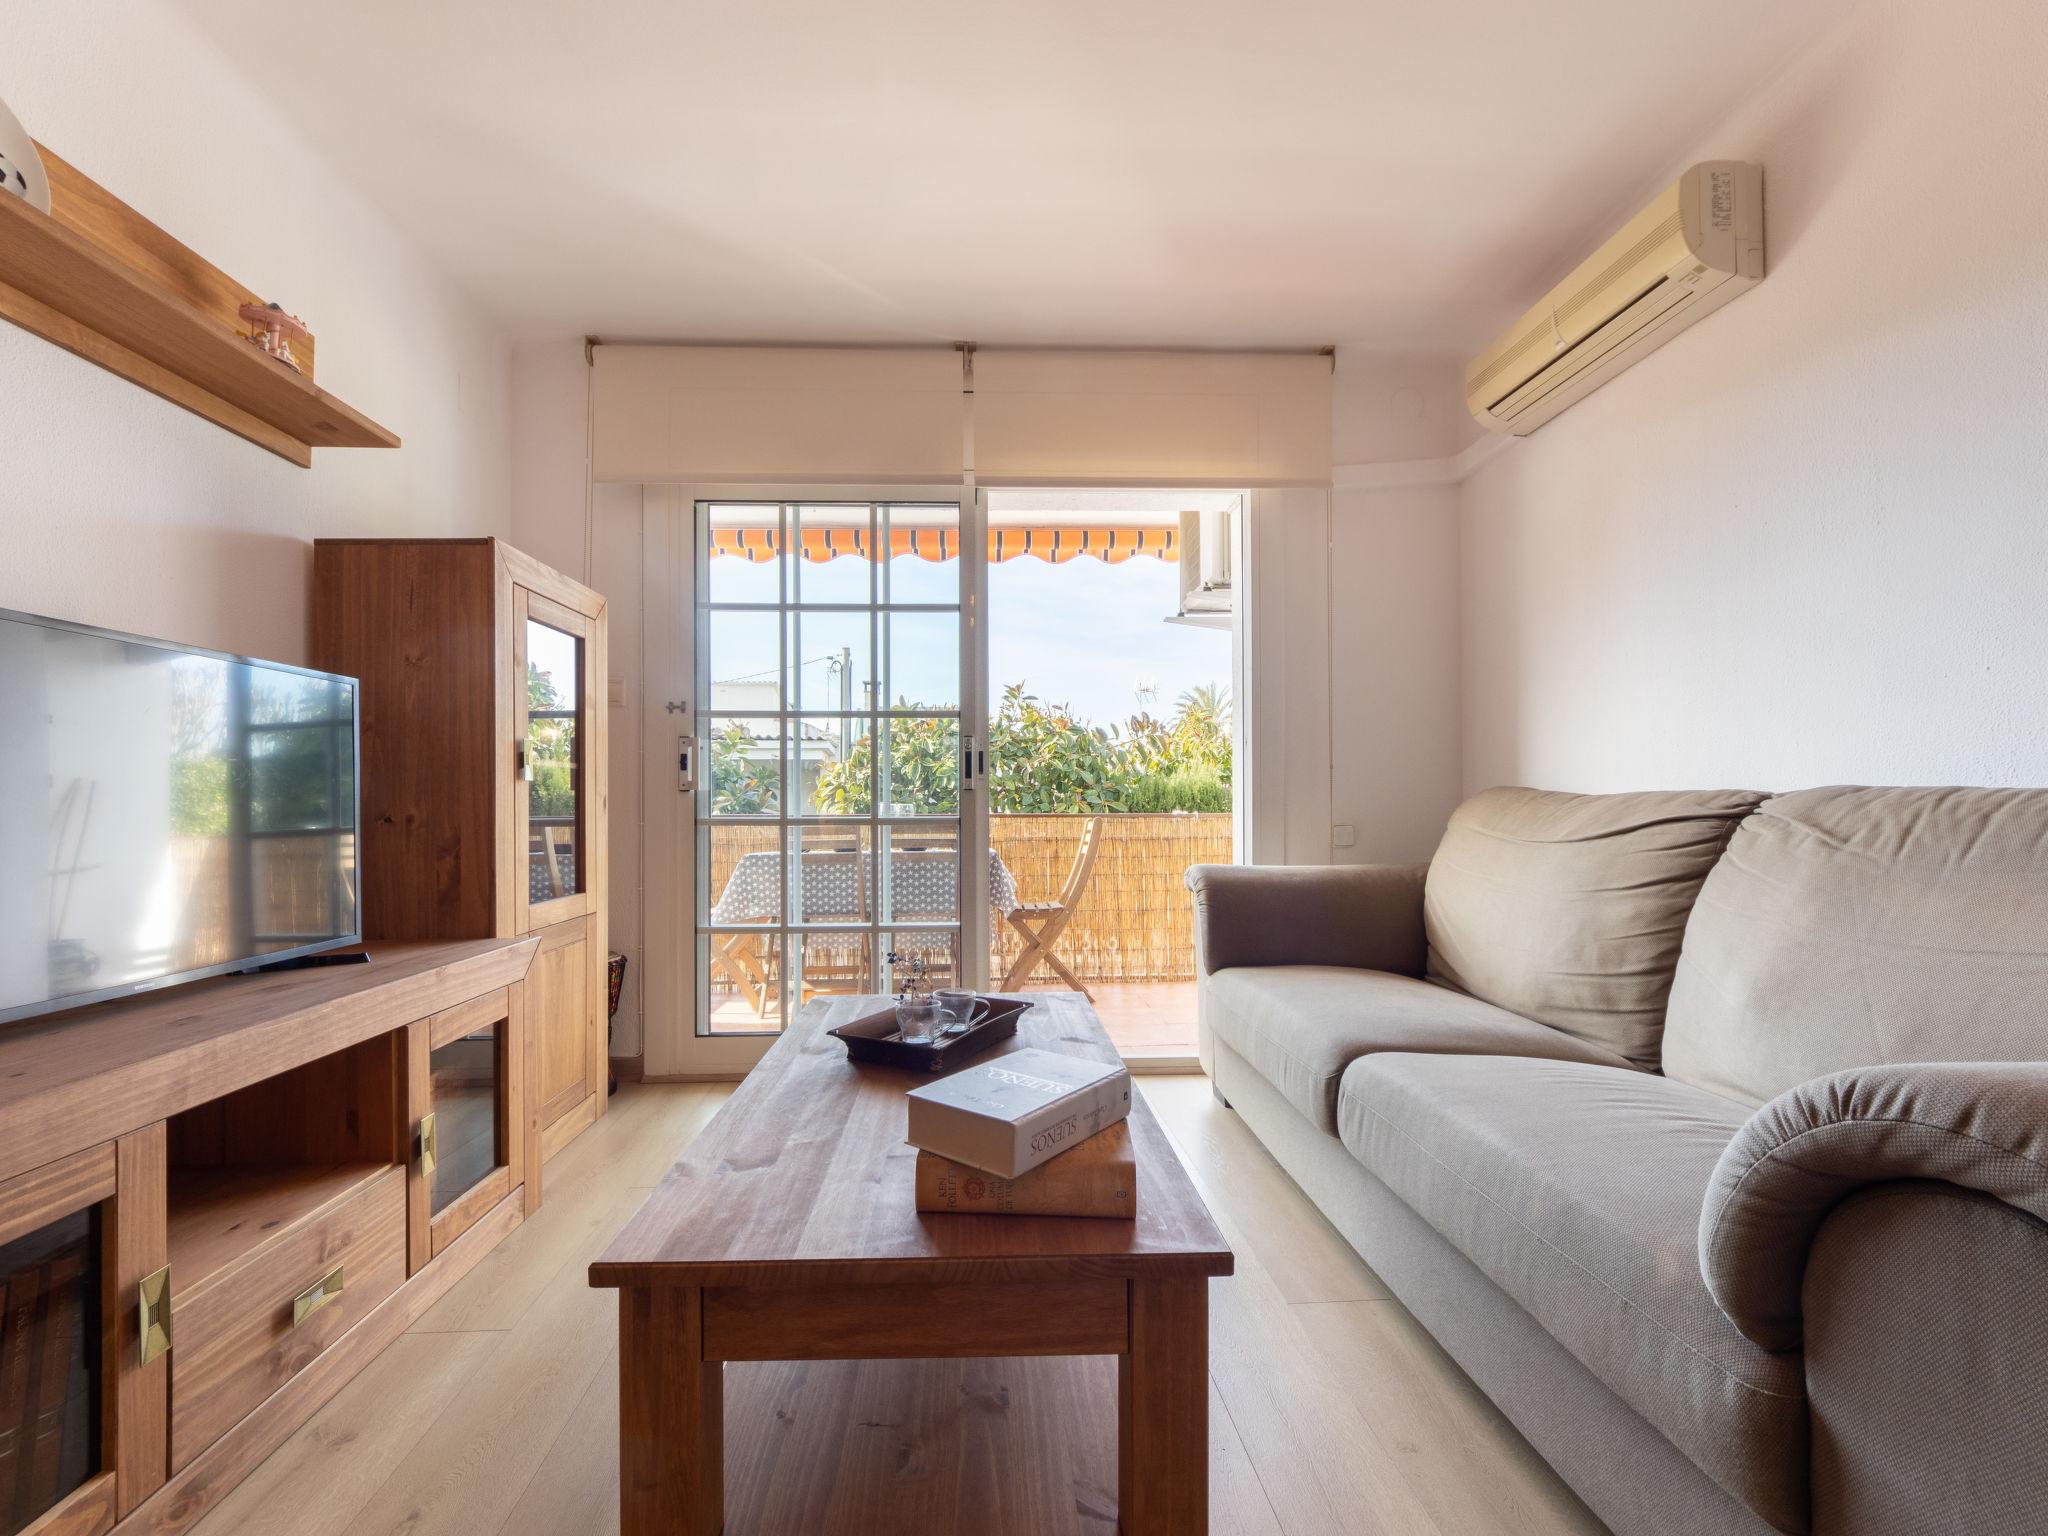 Photo 6 - Appartement de 3 chambres à Torredembarra avec terrasse et vues à la mer